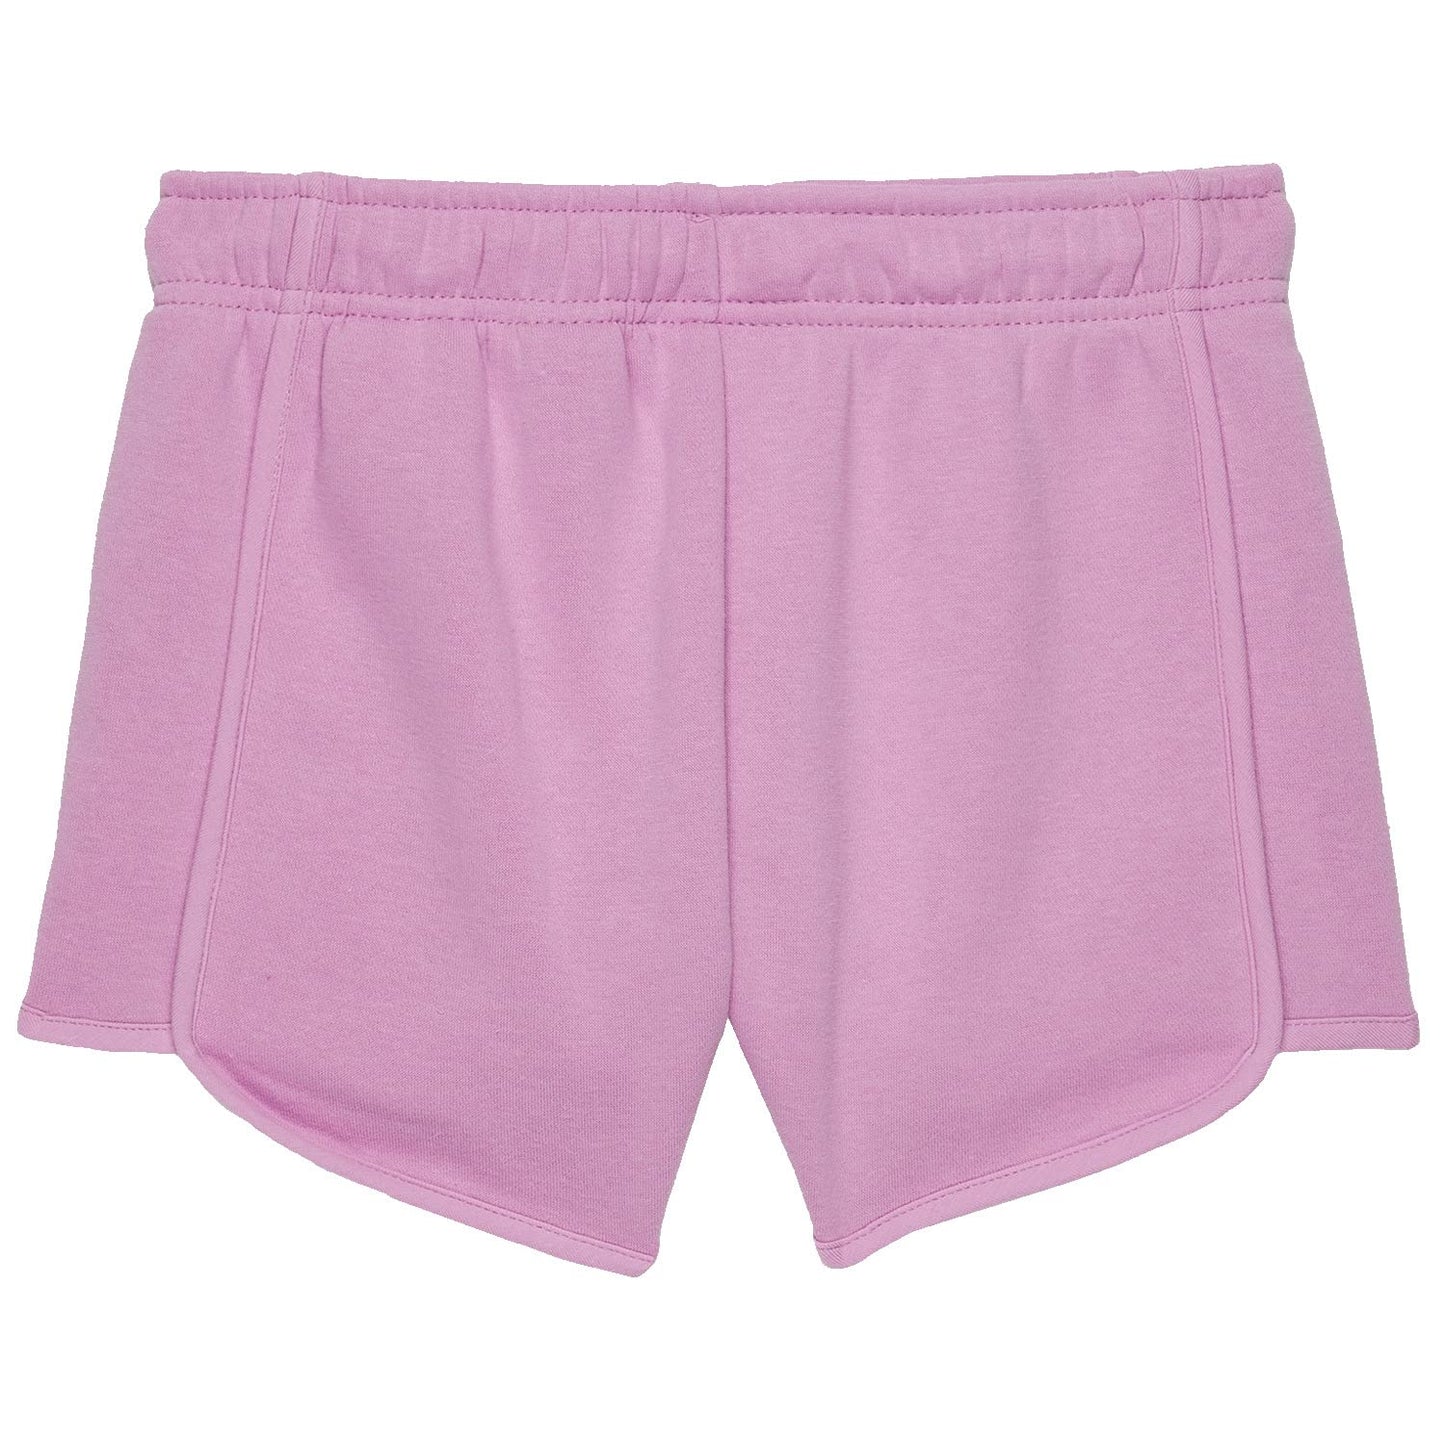 Image 2 of Color-Blocked Shorts (Big Kids)